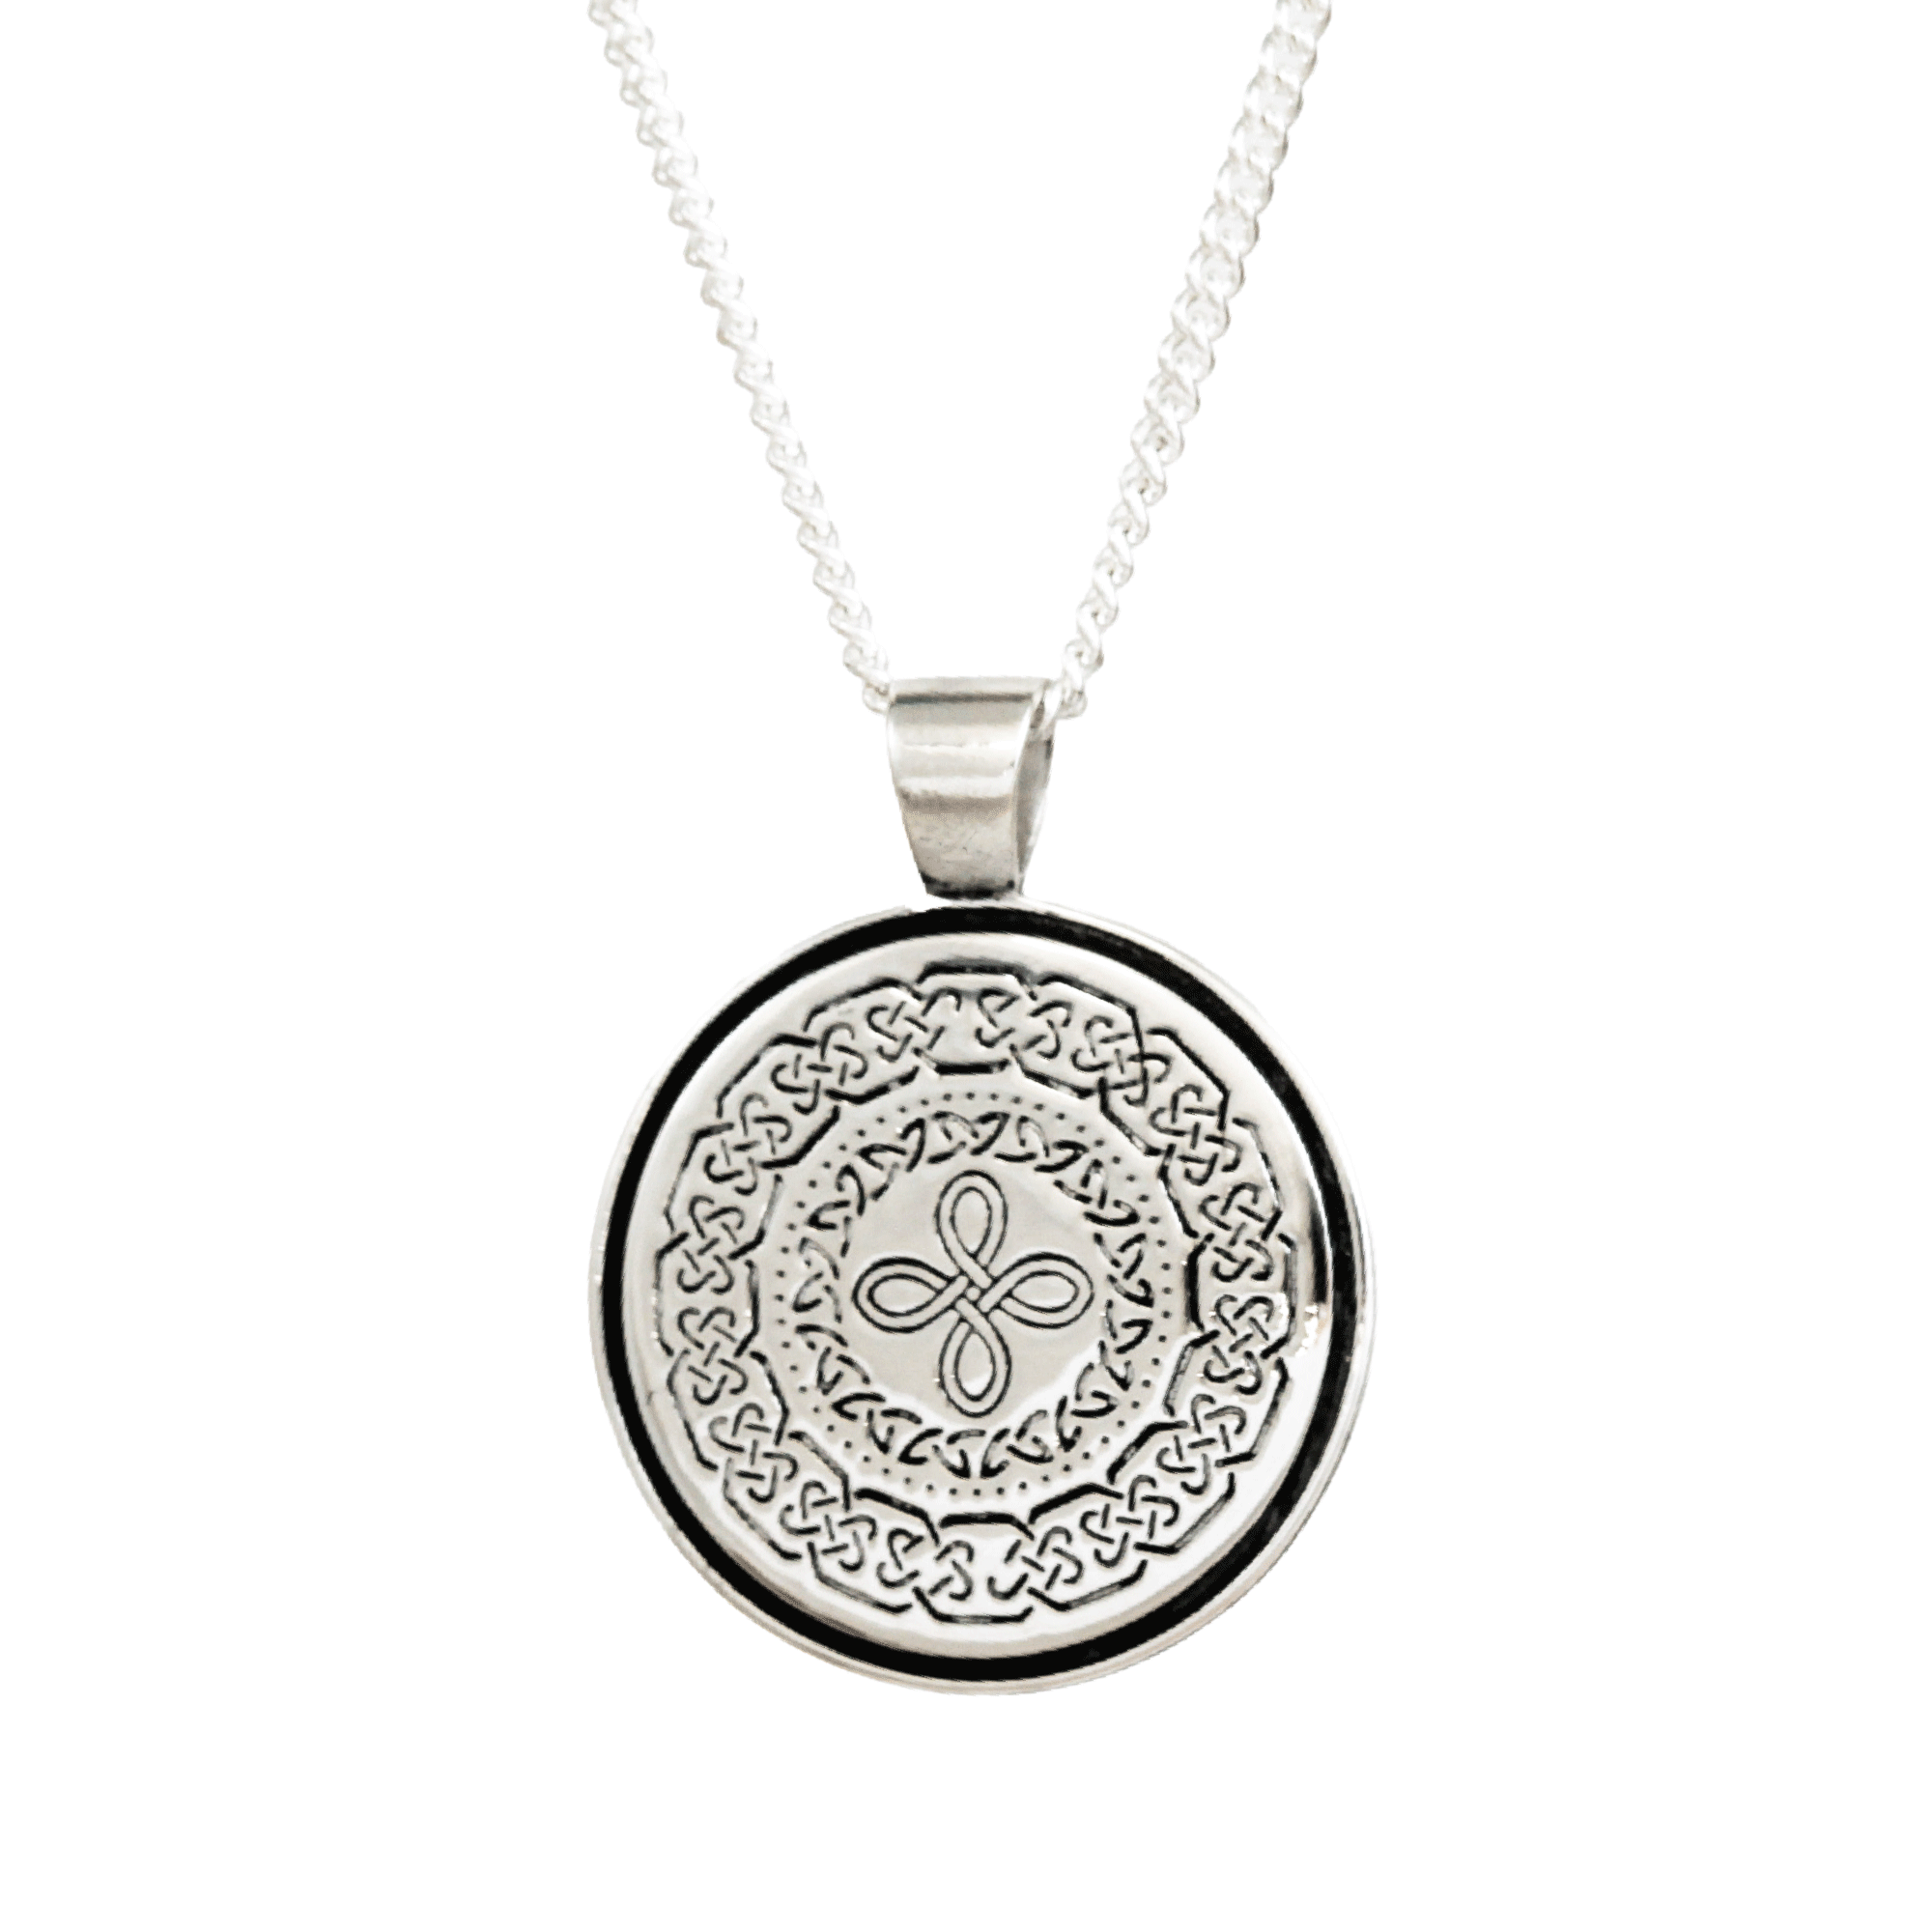 Silver Celtic Knot Mandala Pendant - Elegant Journey Companion